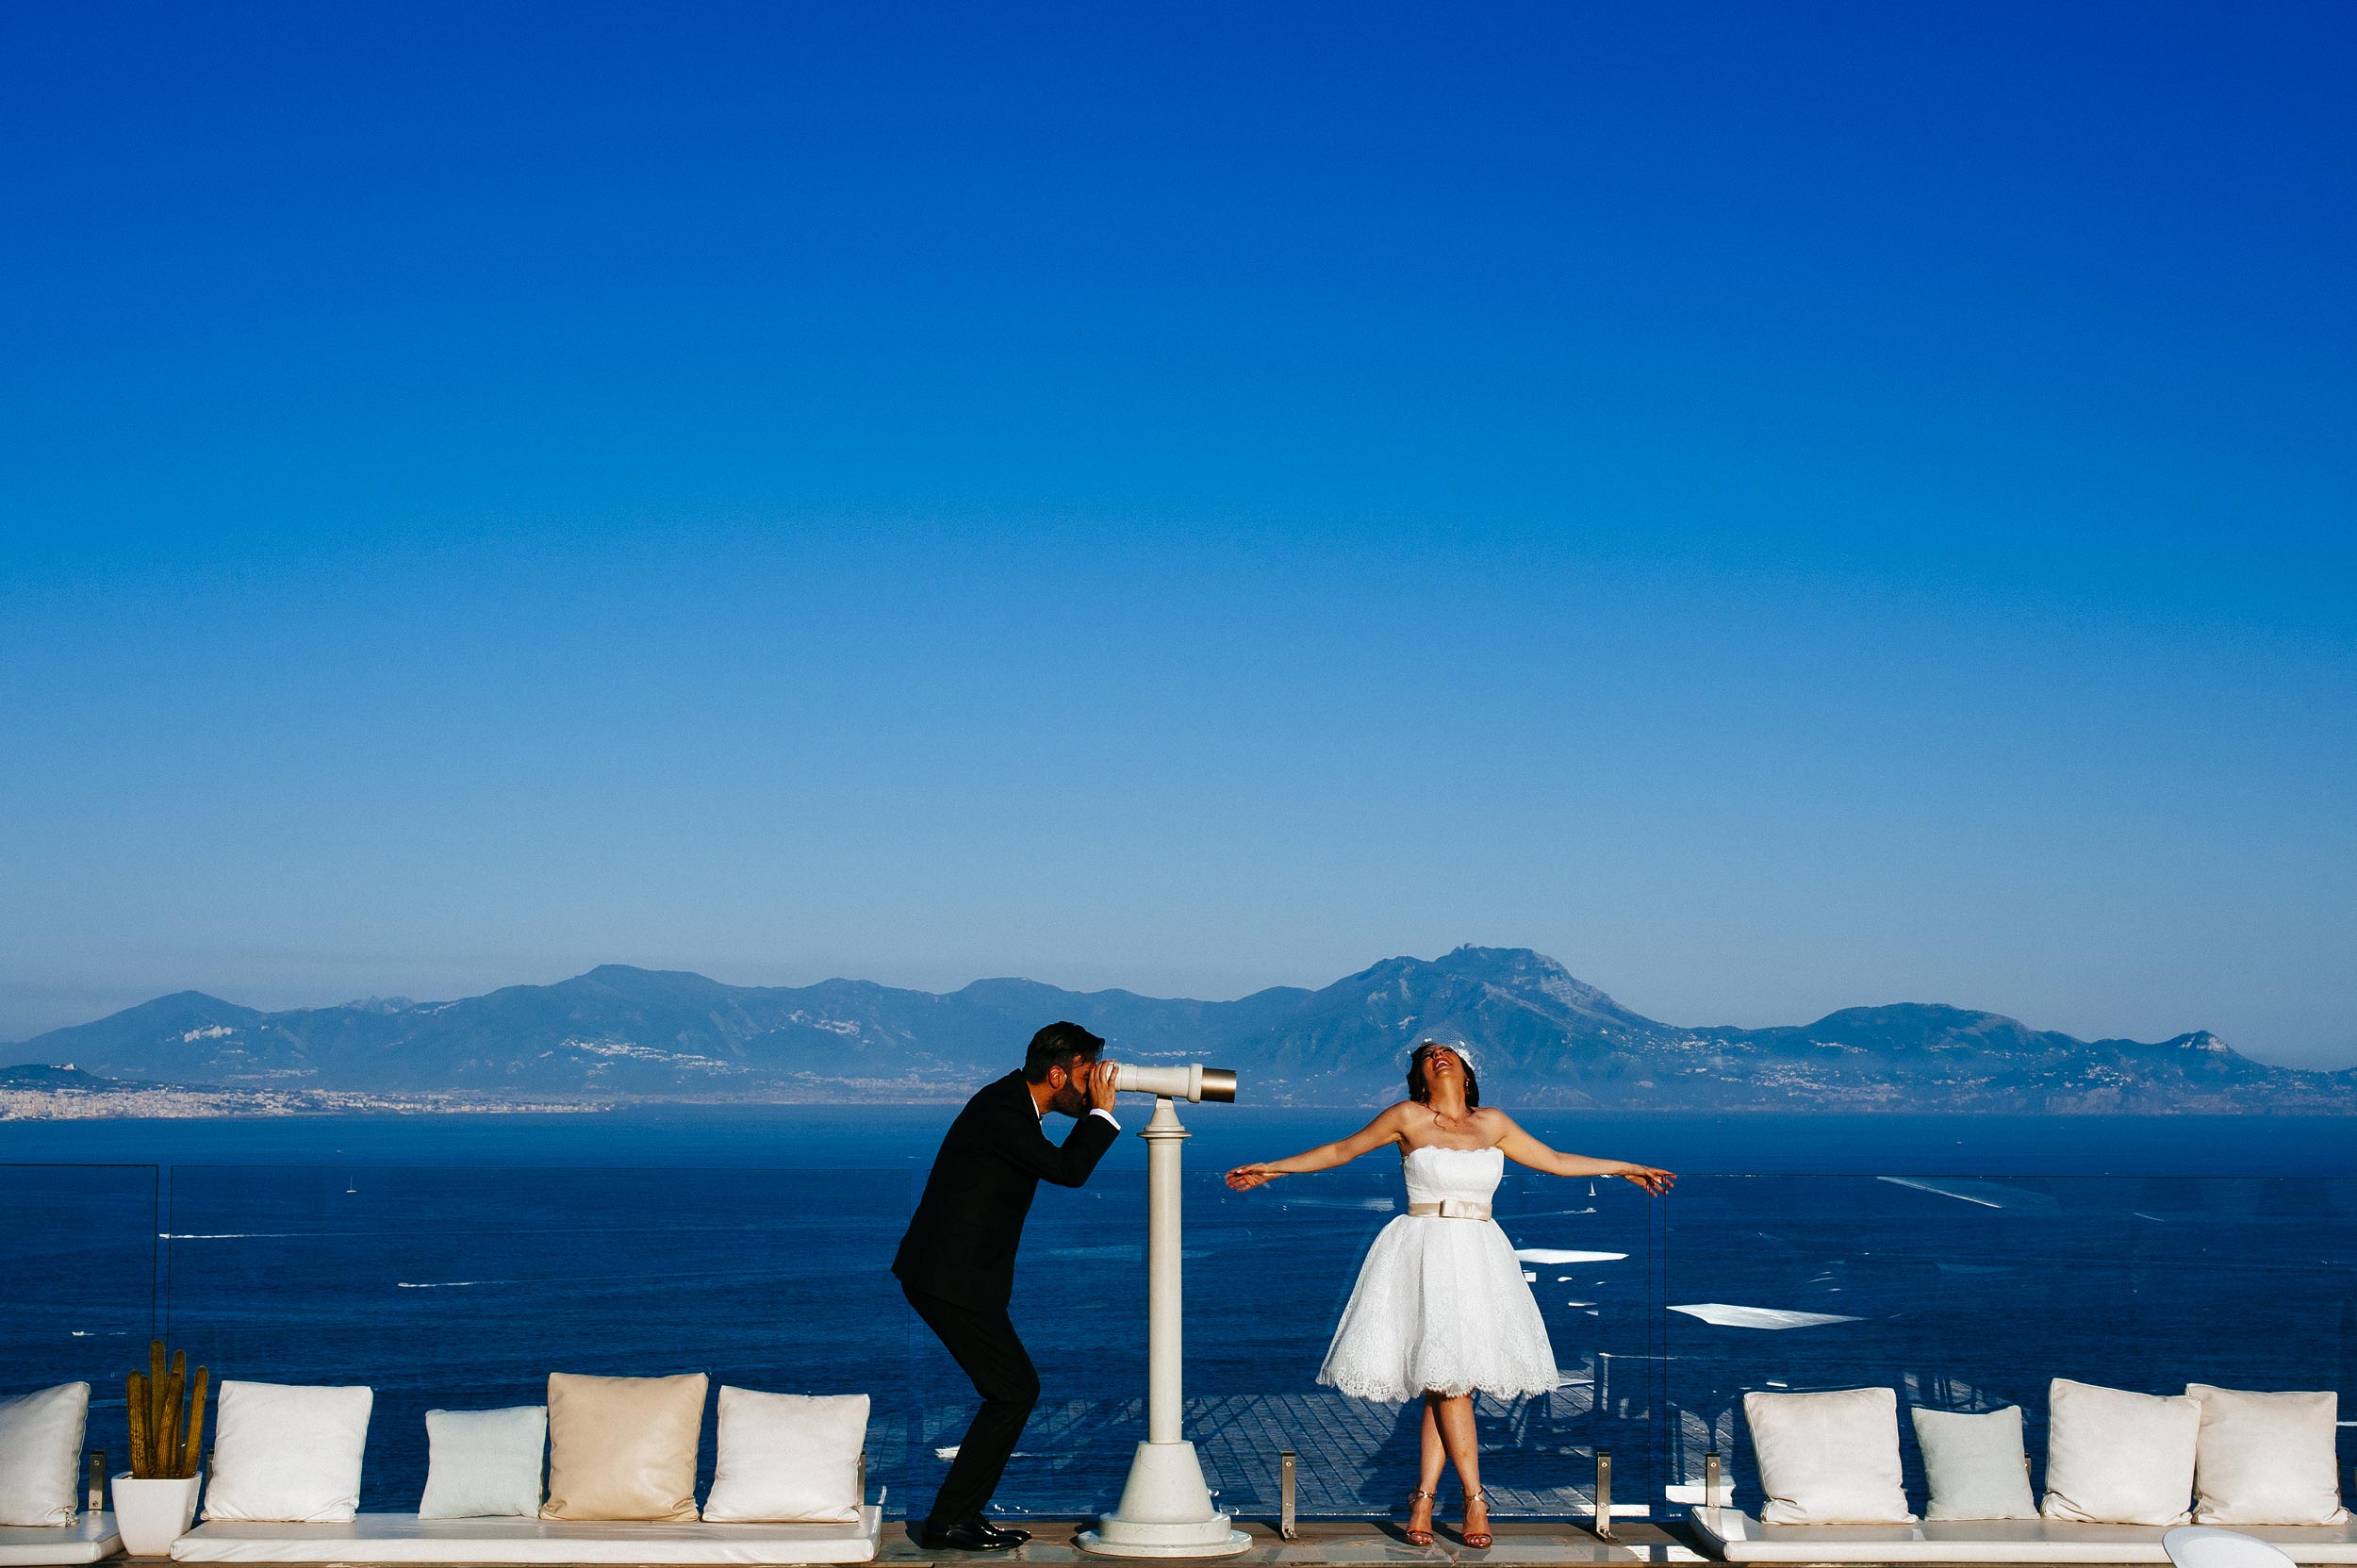 wedding-naples-terrace-over-the-sea-groom-watching-bride-through-spyglass-by-Alessandro-Avenali.jpg